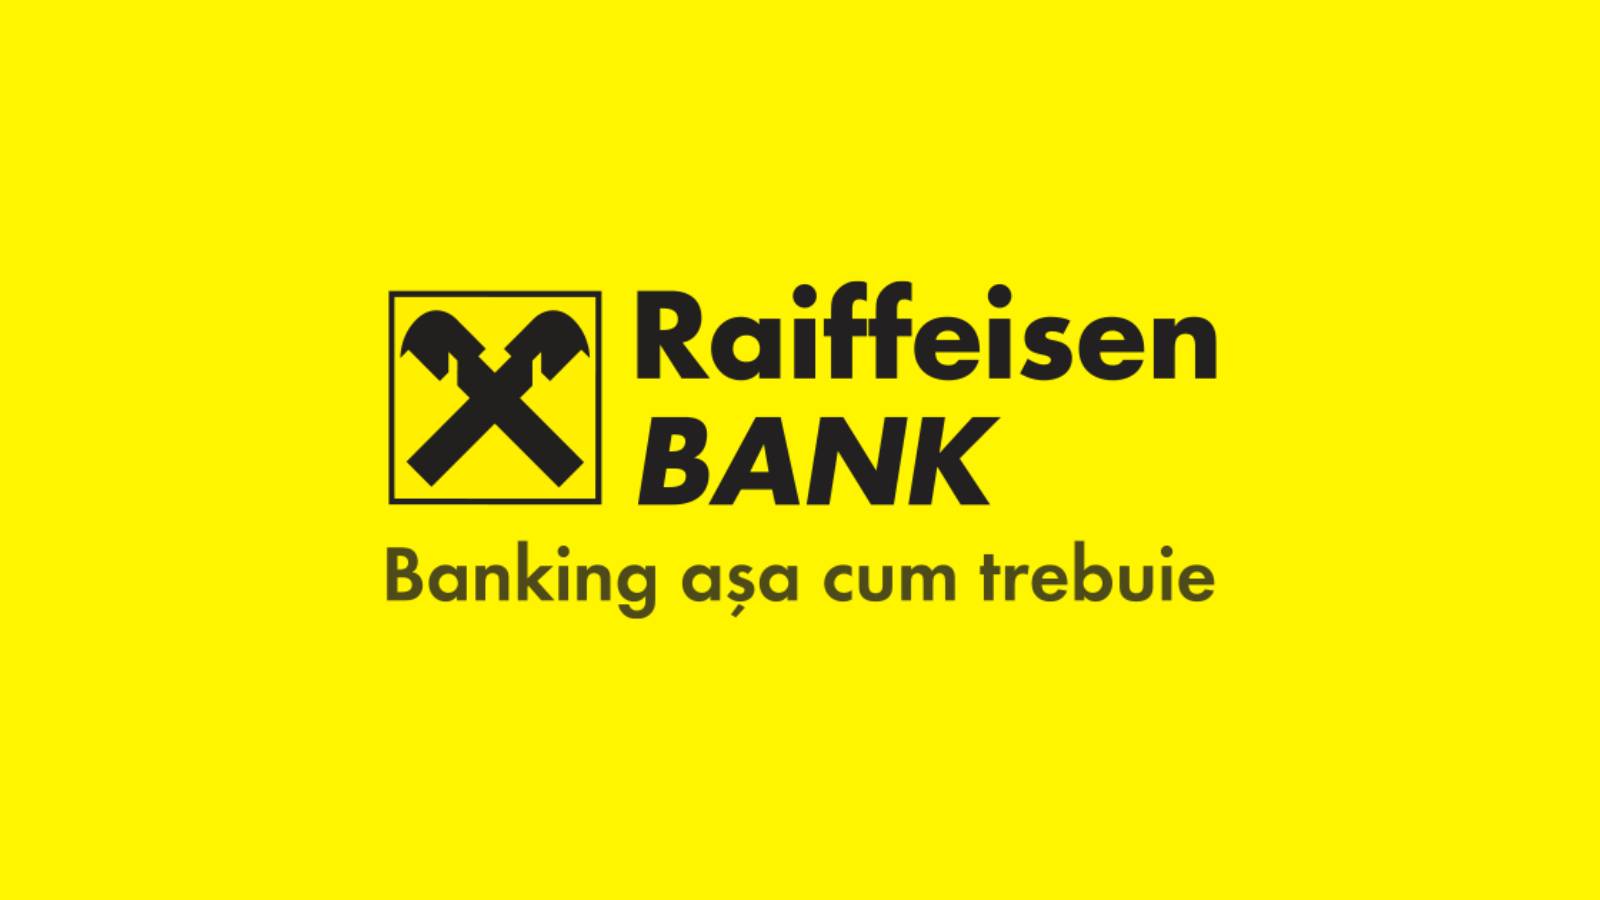 Raiffeisen Bank service